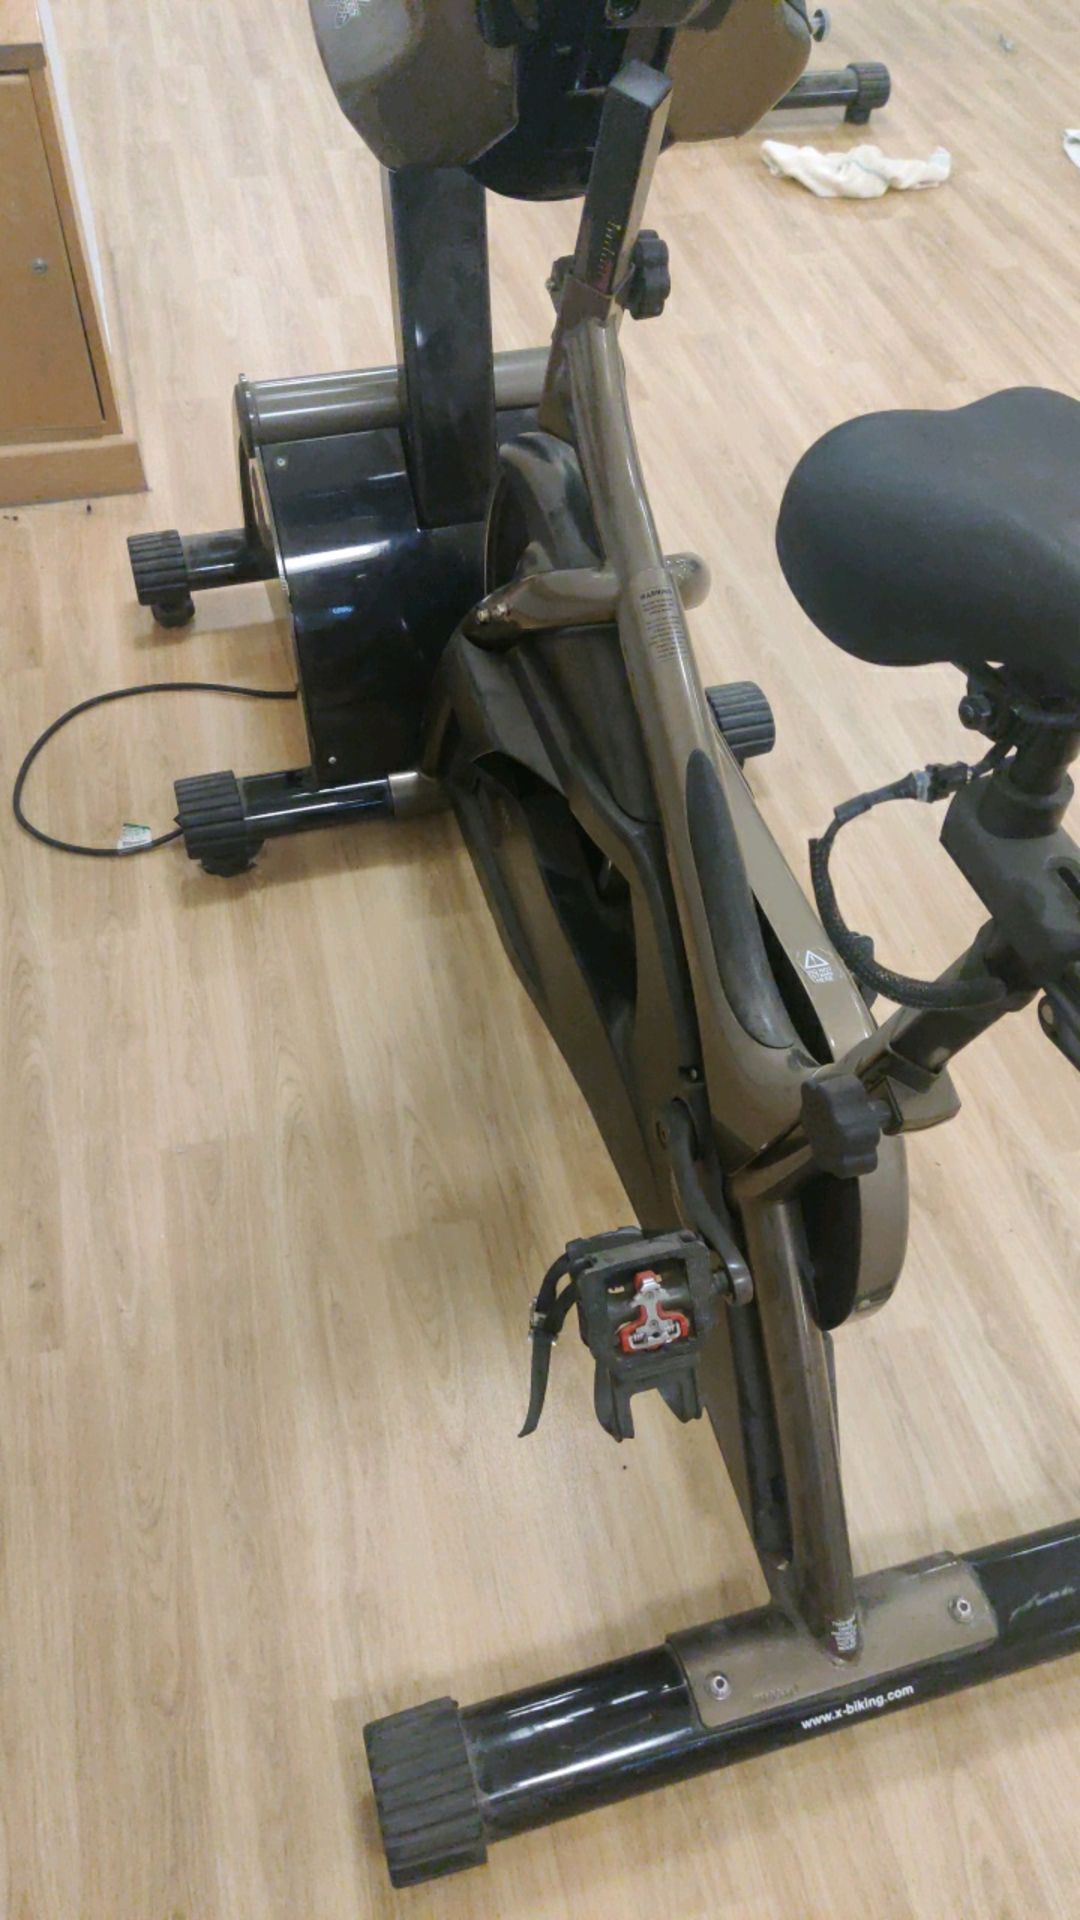 Xdream spinning bike trixter - Image 6 of 6